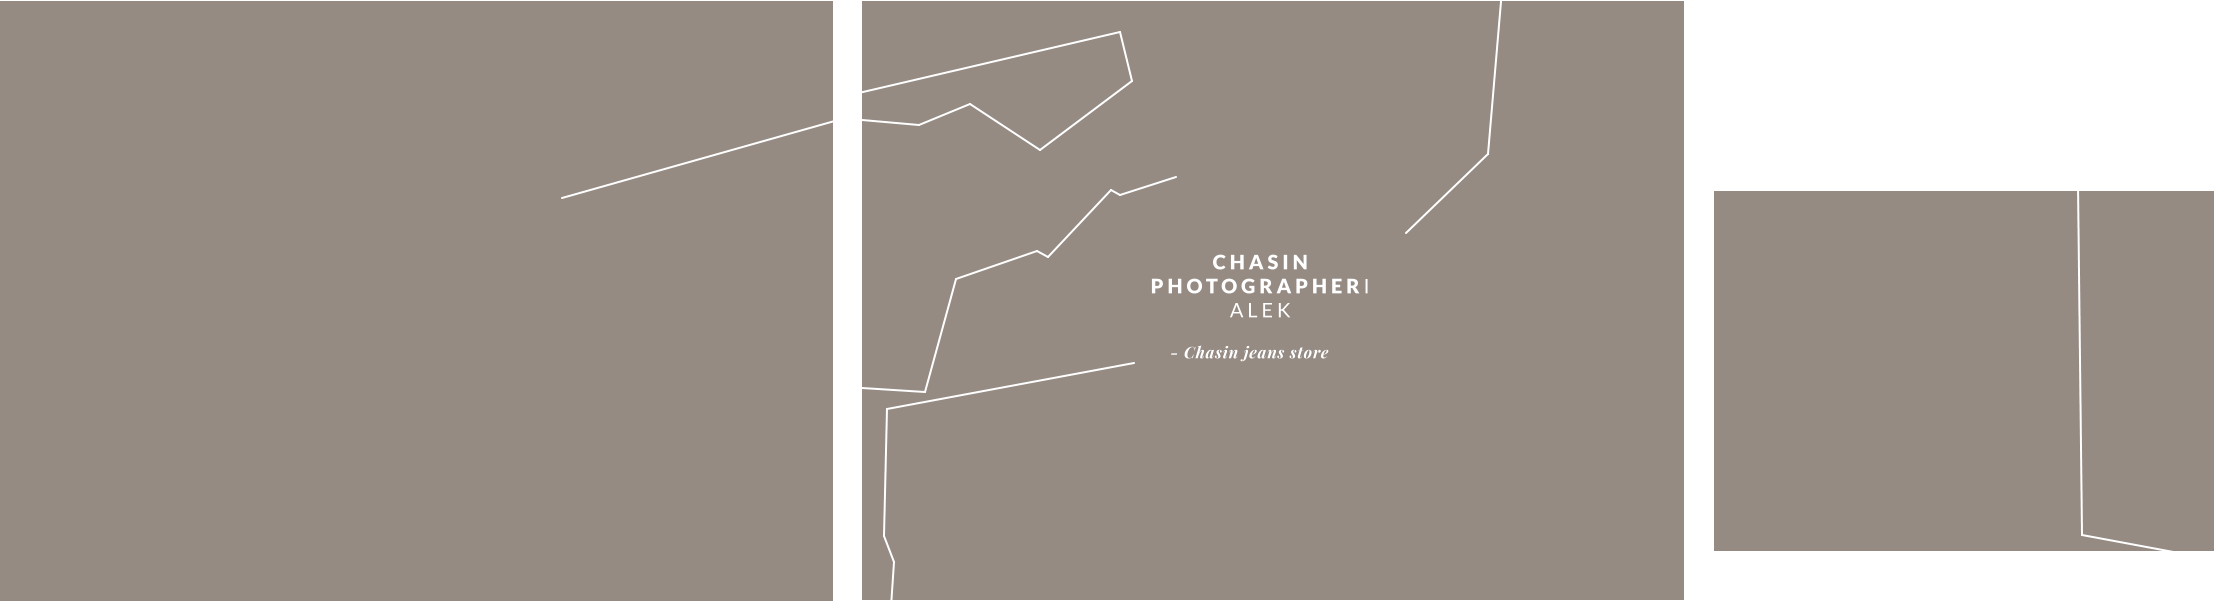 CHASIN PHOTOGRAPHERI ALEK - Chasin jeans store